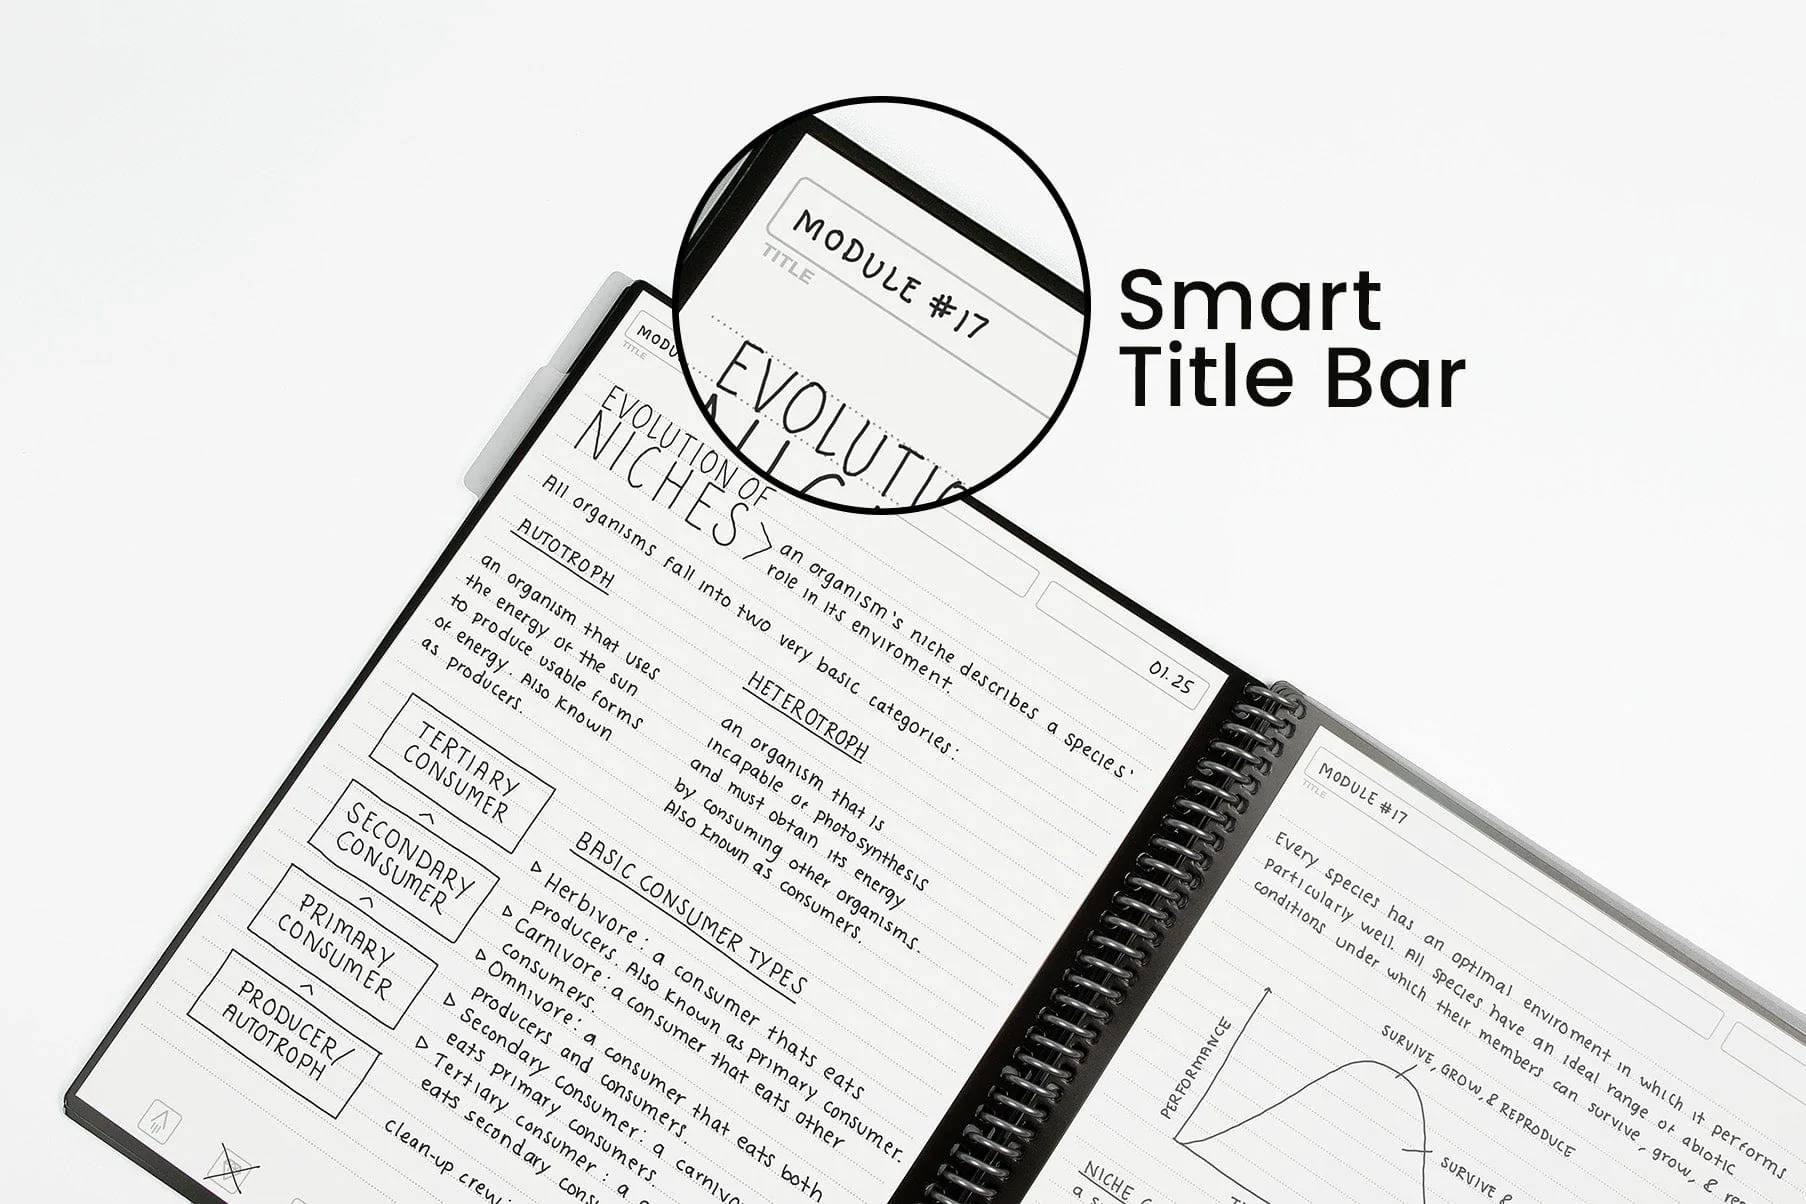 smart title bar in Rocketbook Multi-Subject notebook